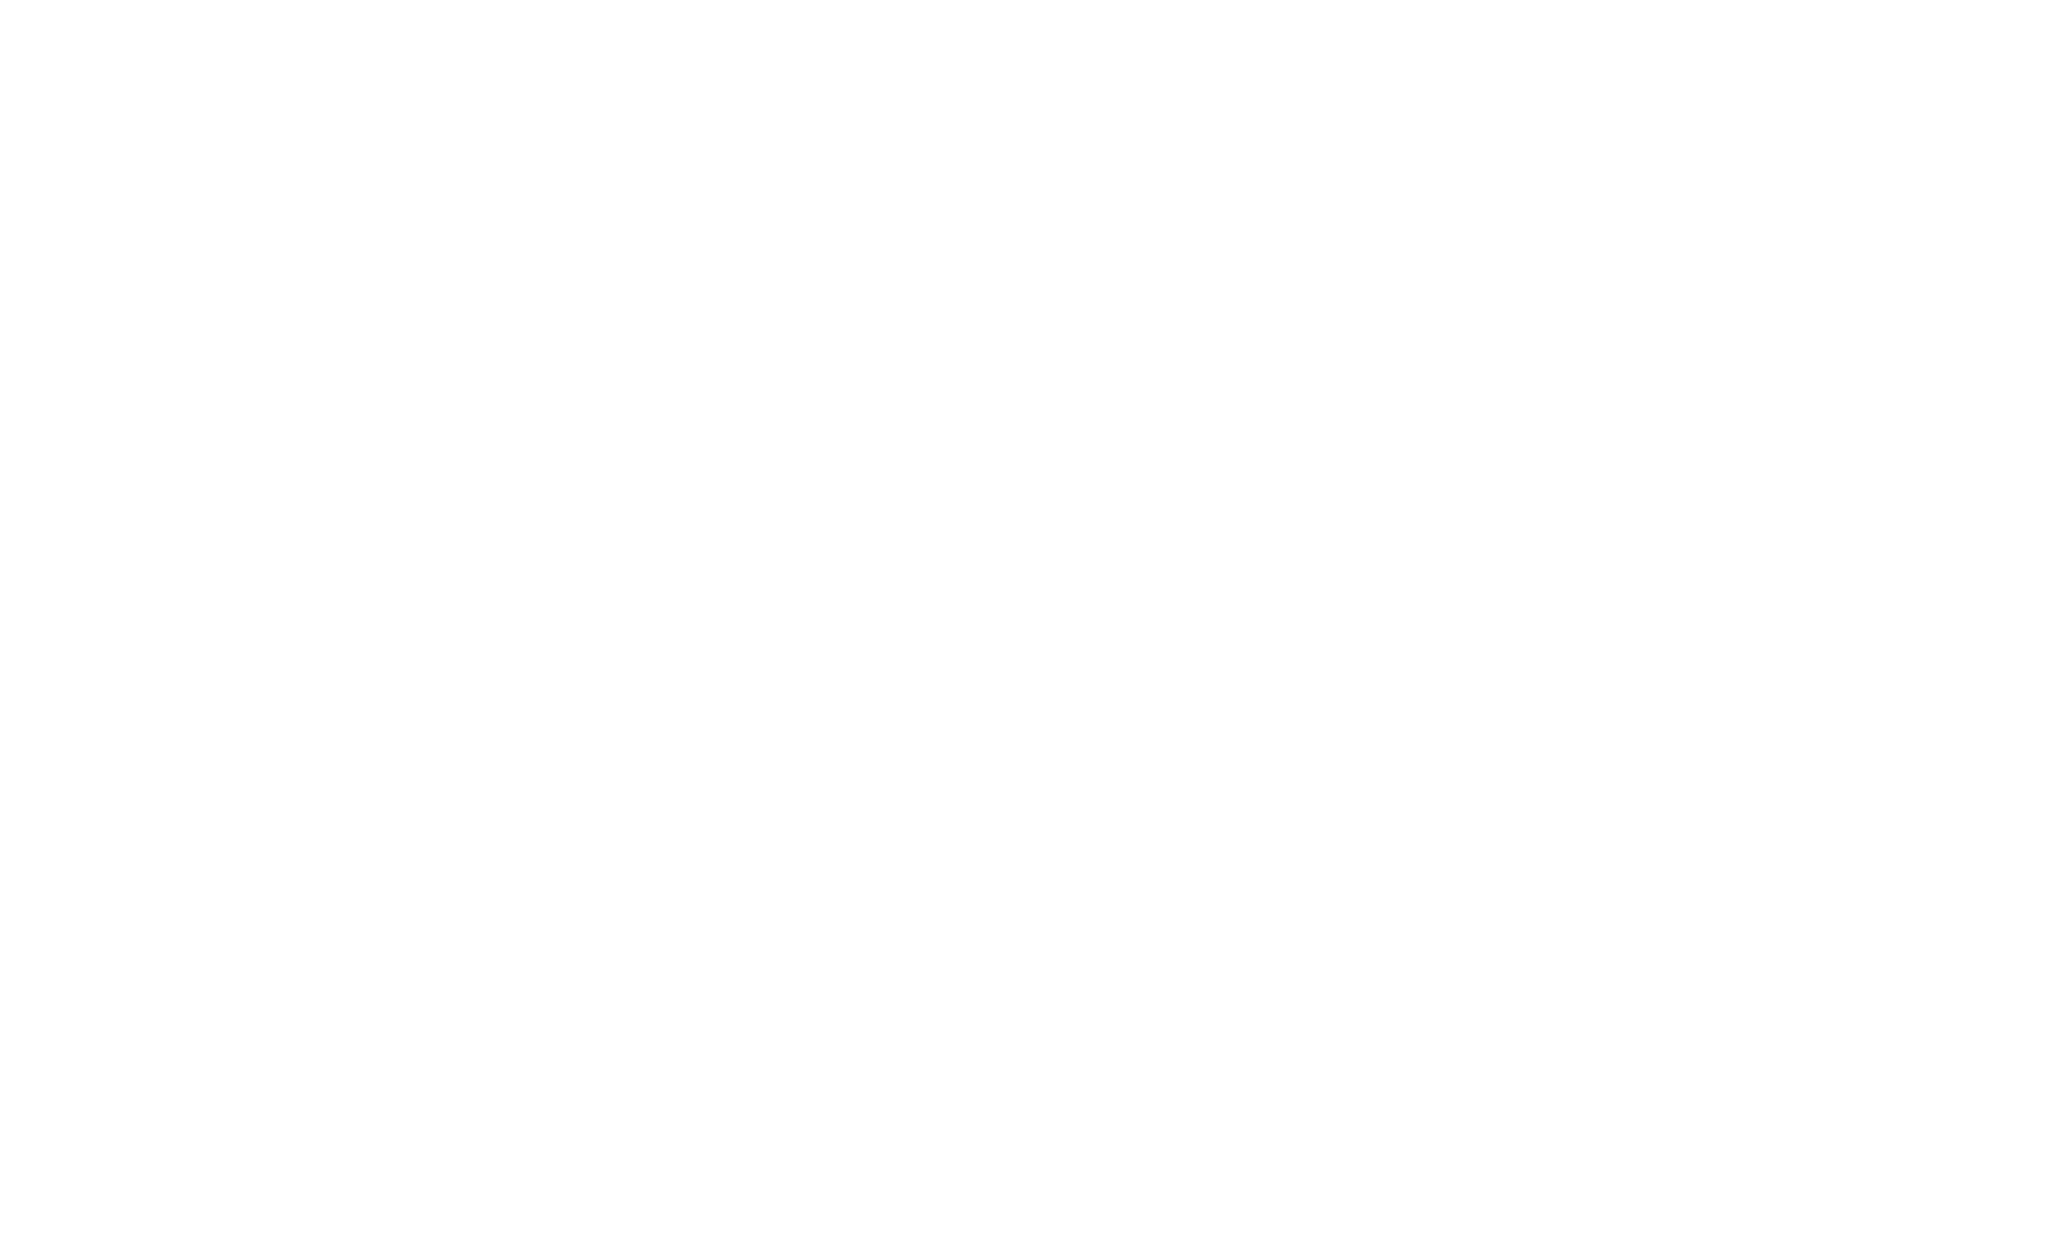 Women Impact Tech Logo - All White - Transparent Background